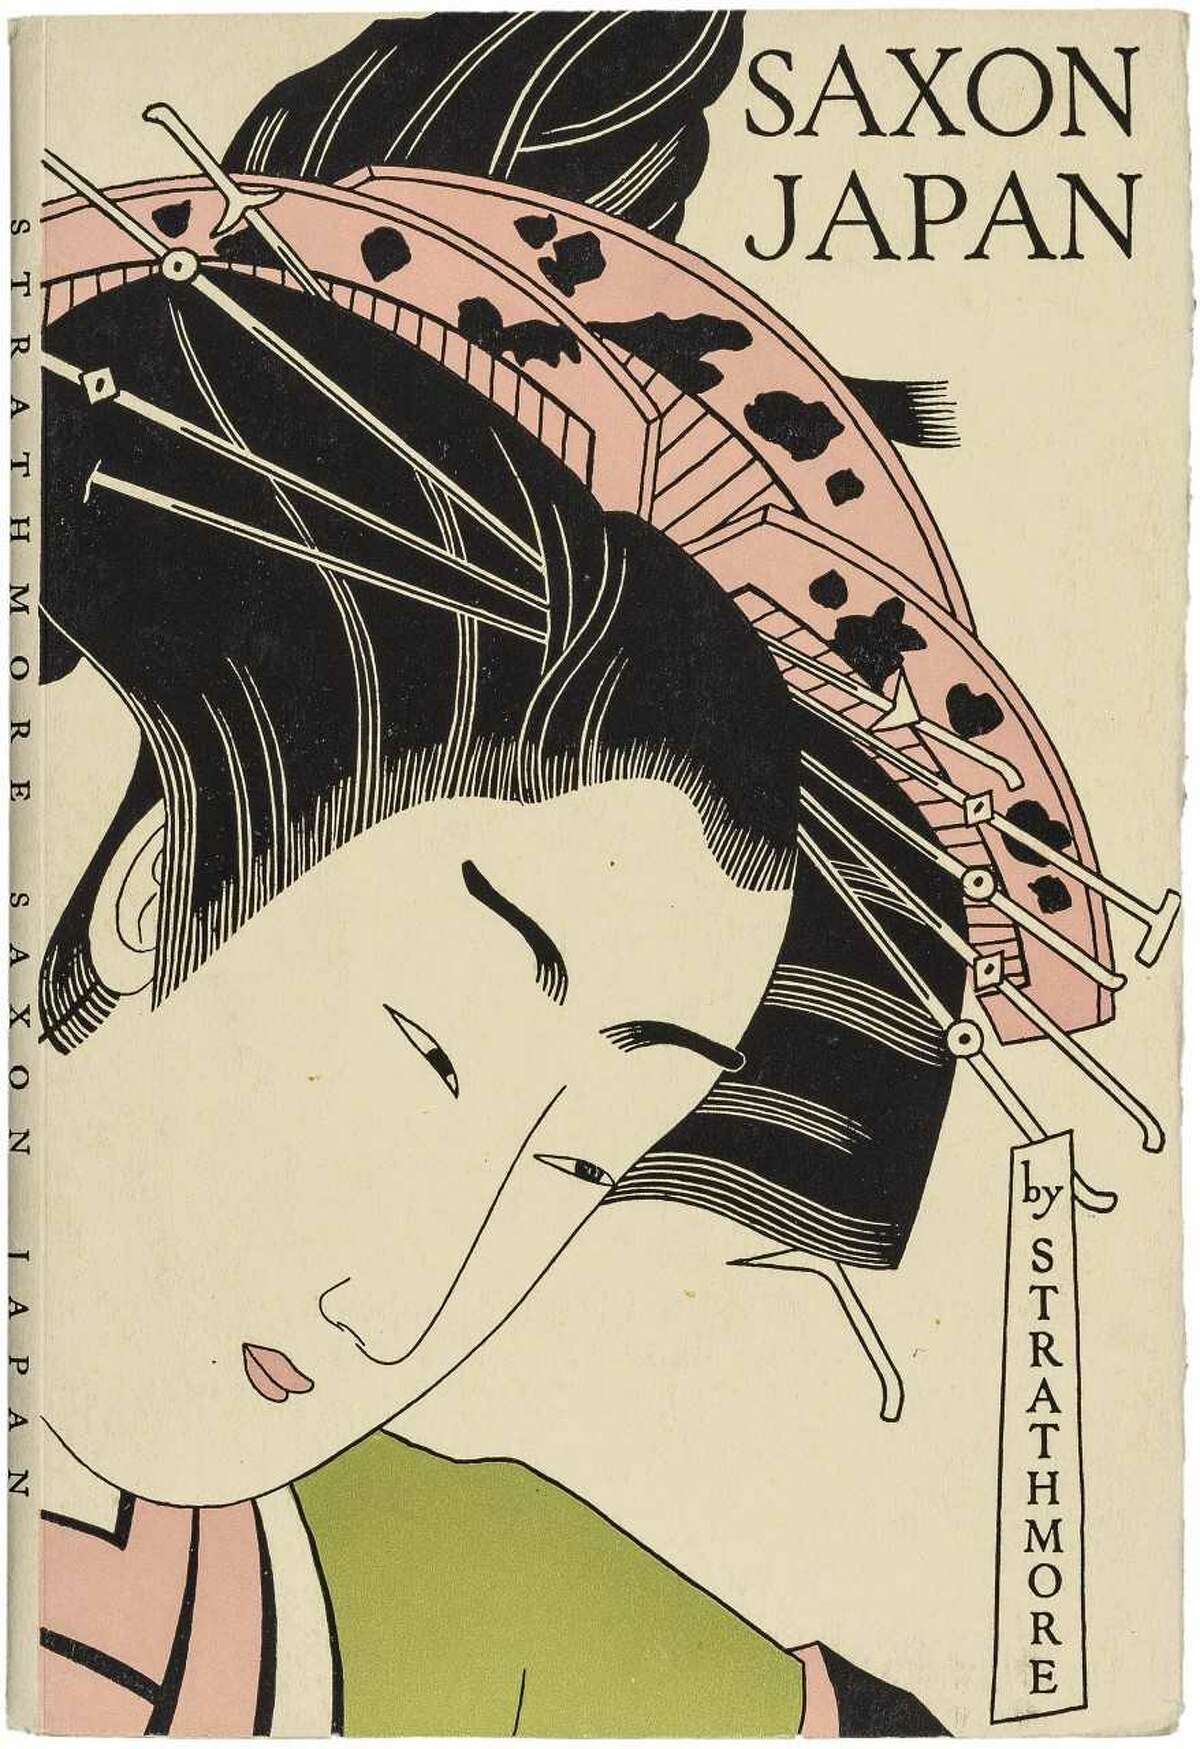 Catherine Mellen's "Saxon Japan" 1932 (Courtesy Mohawk)